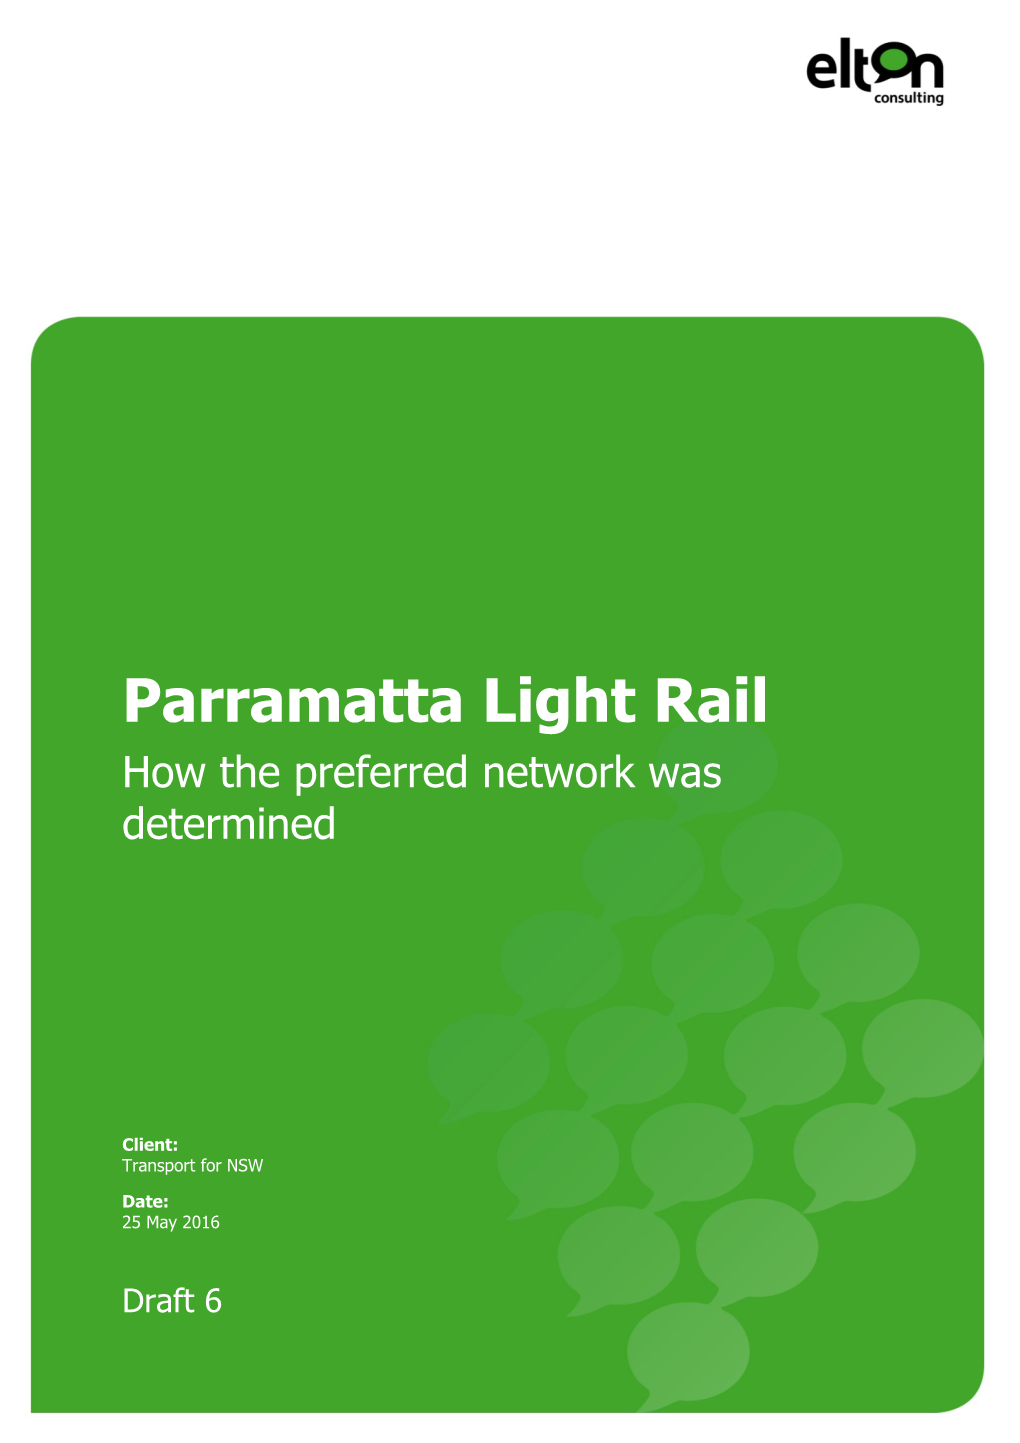 Parramatta Light Rail How the Preferred Network Was Determined